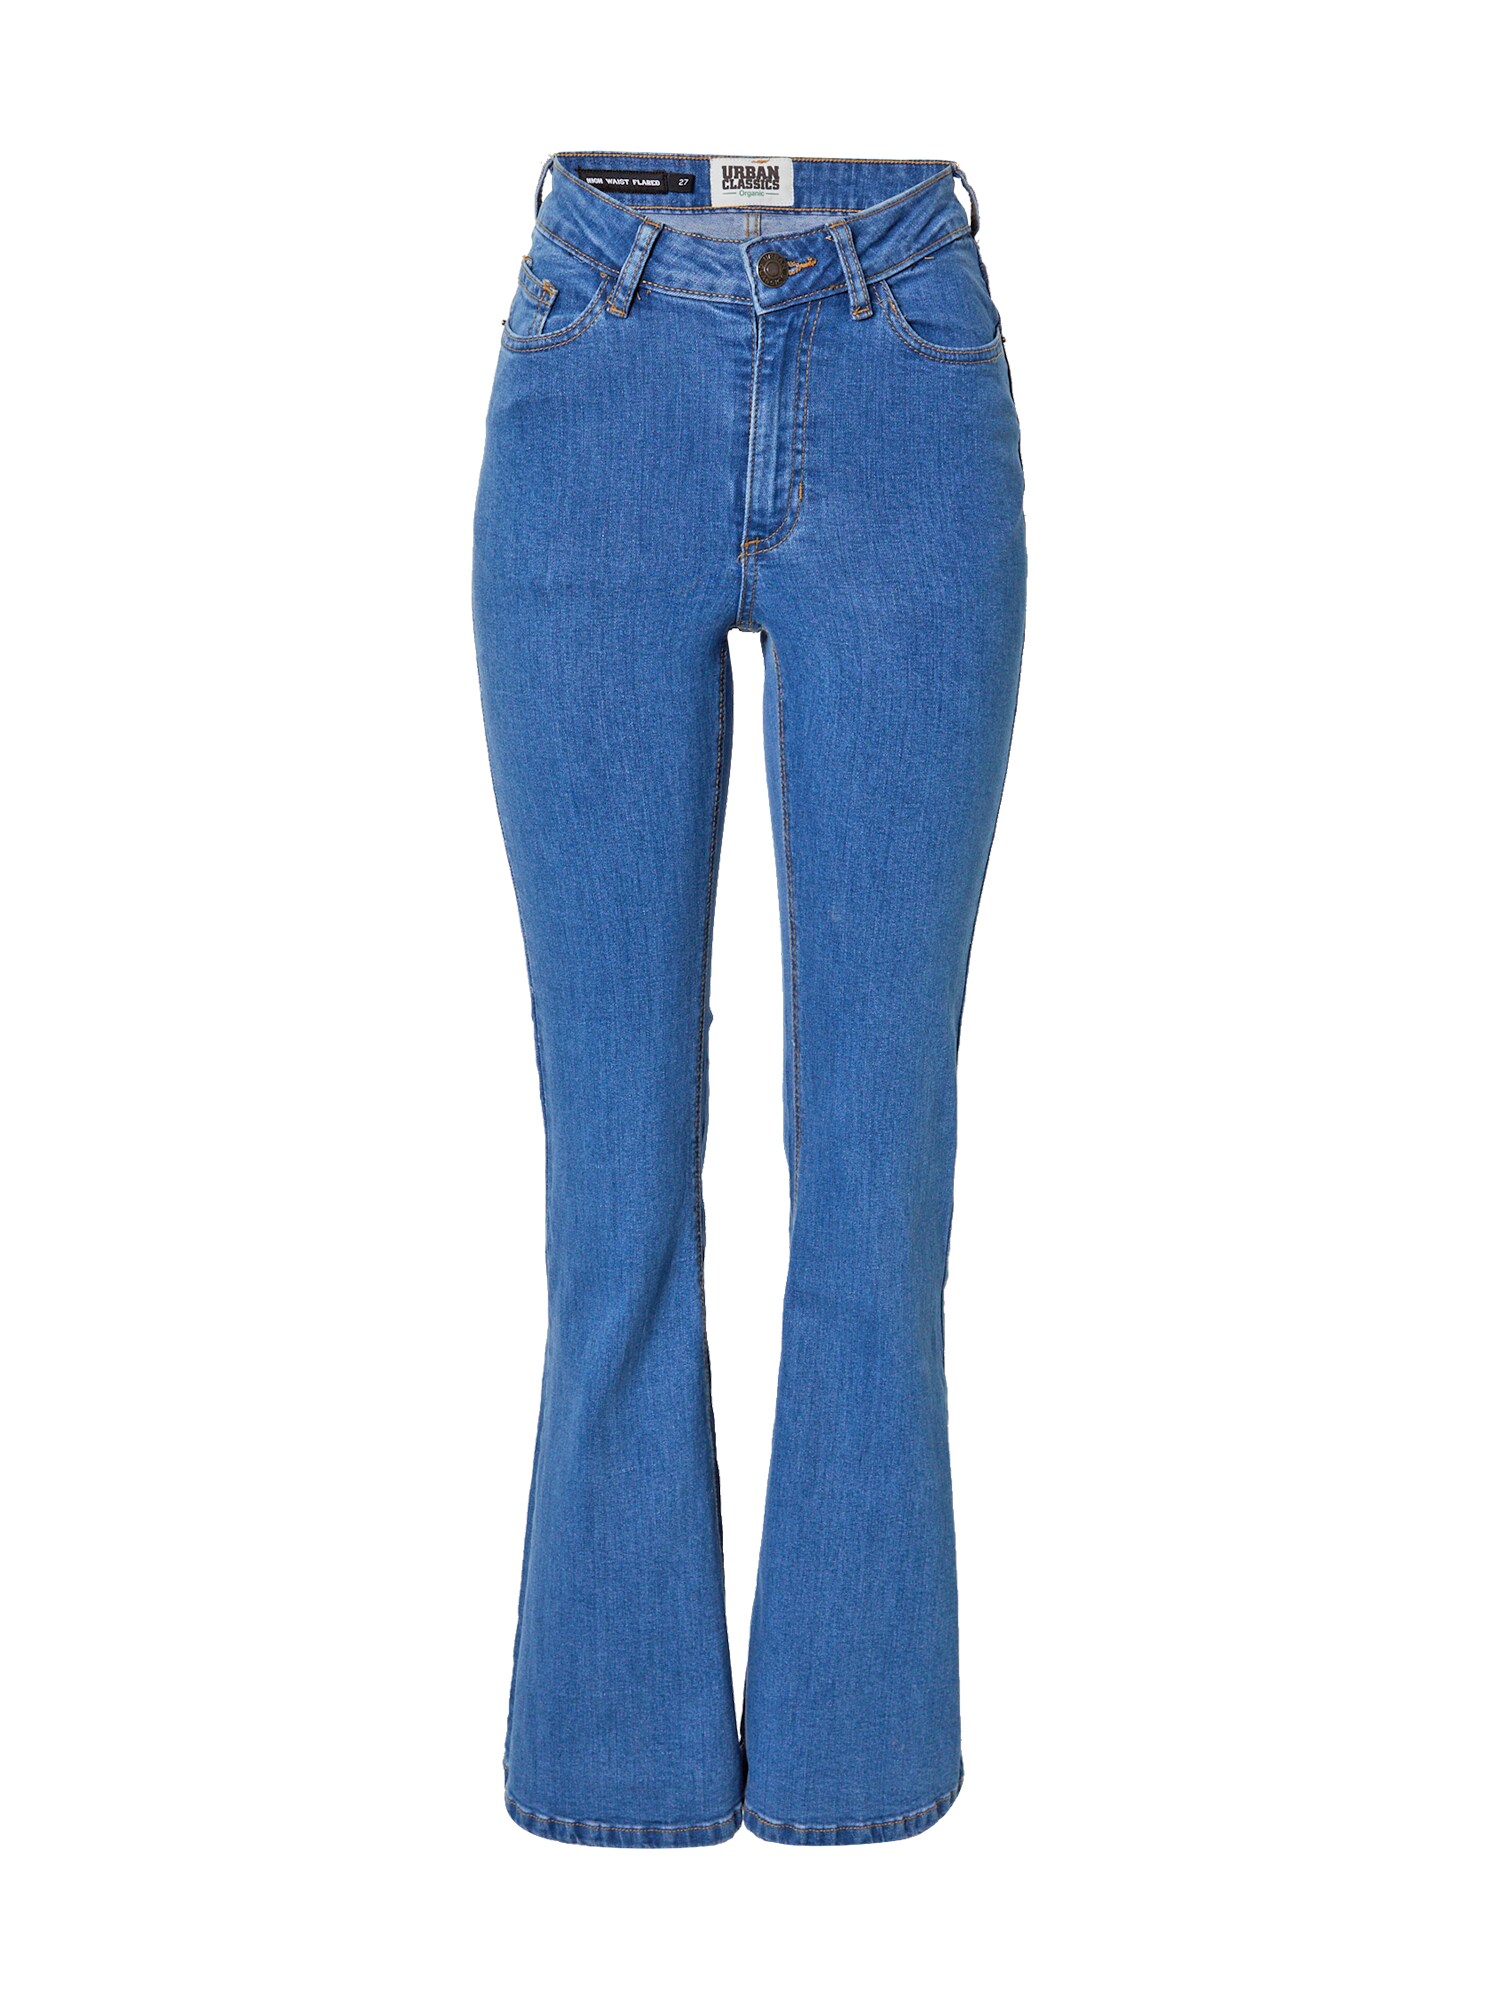 Urban Classics Jeans blå denim product